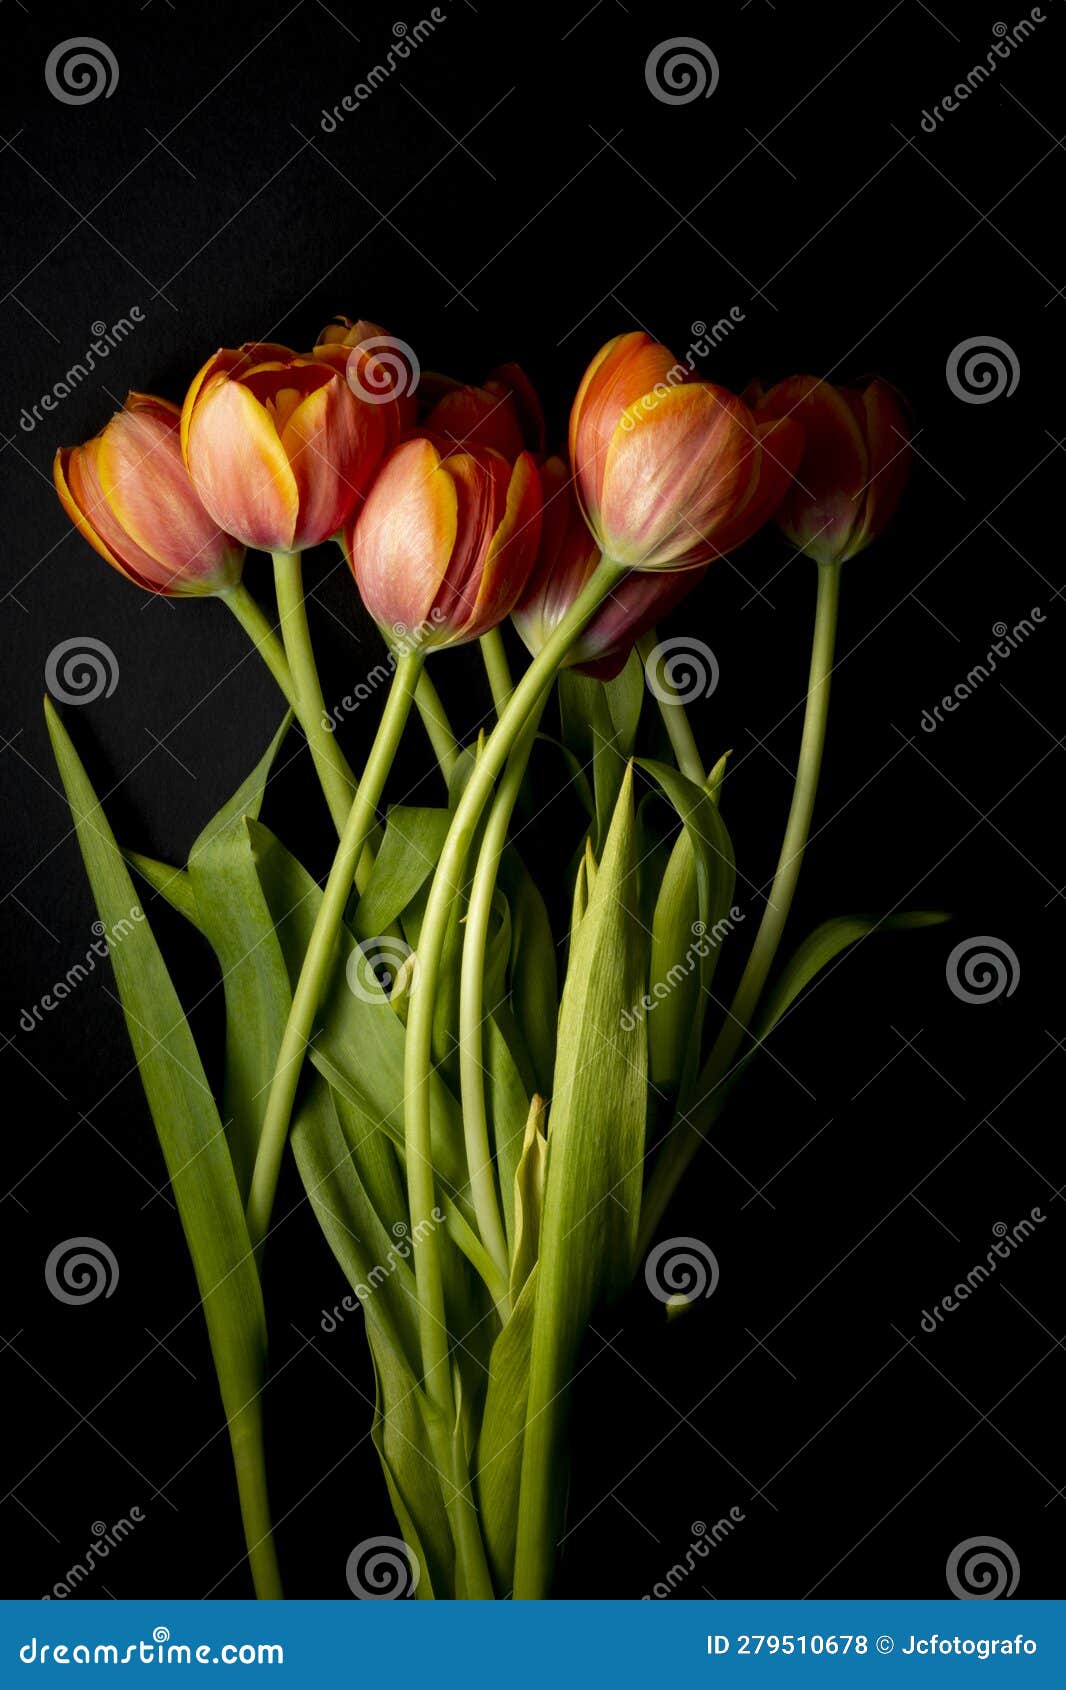 colorful orange tulips floral ornament on black background